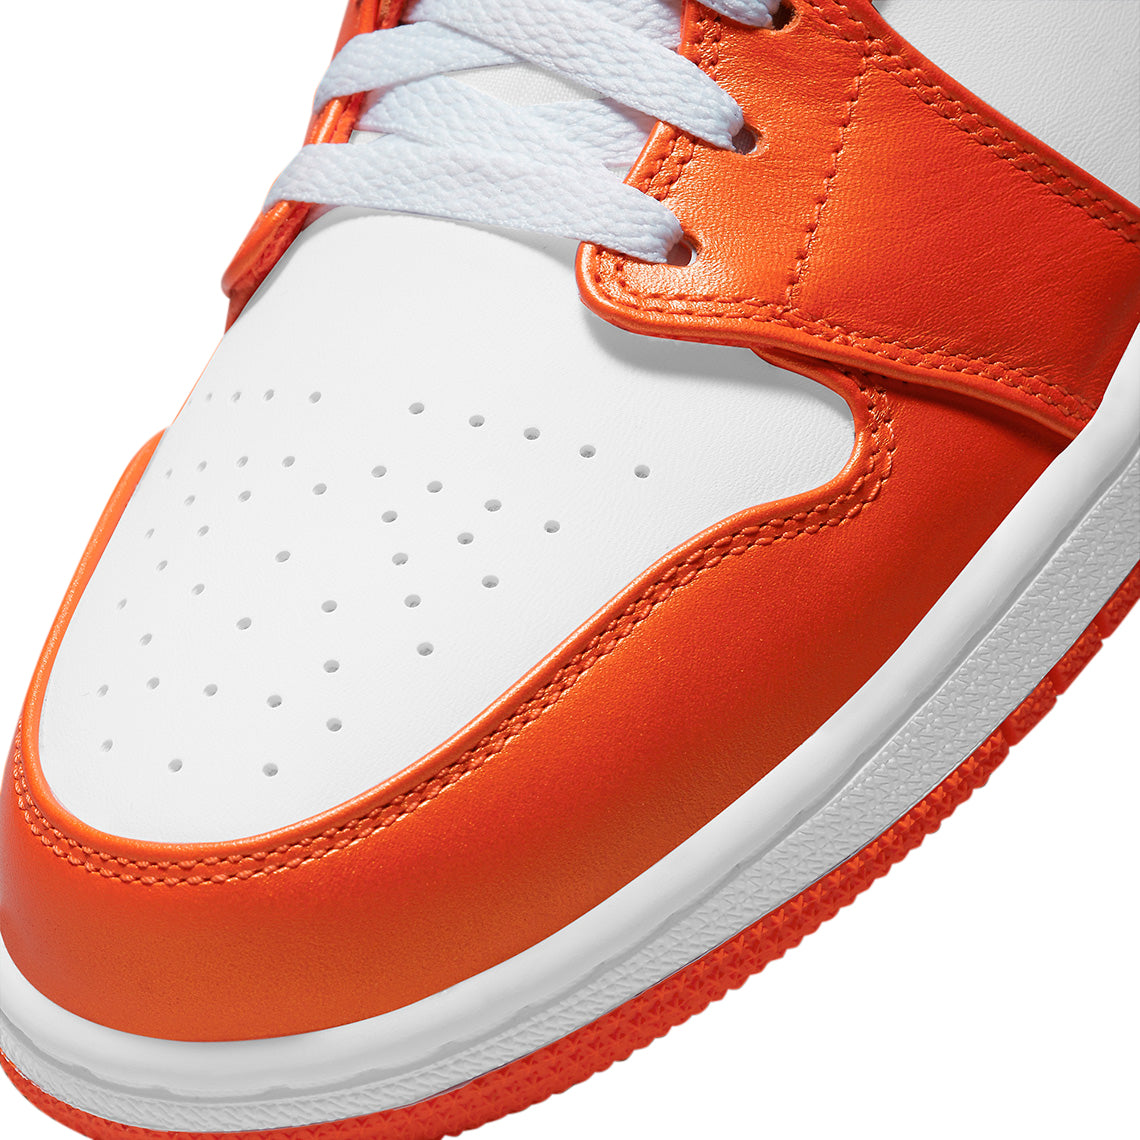 Jordan 1 Mid SE "Metallic Orange" Electro Orange/Black-White